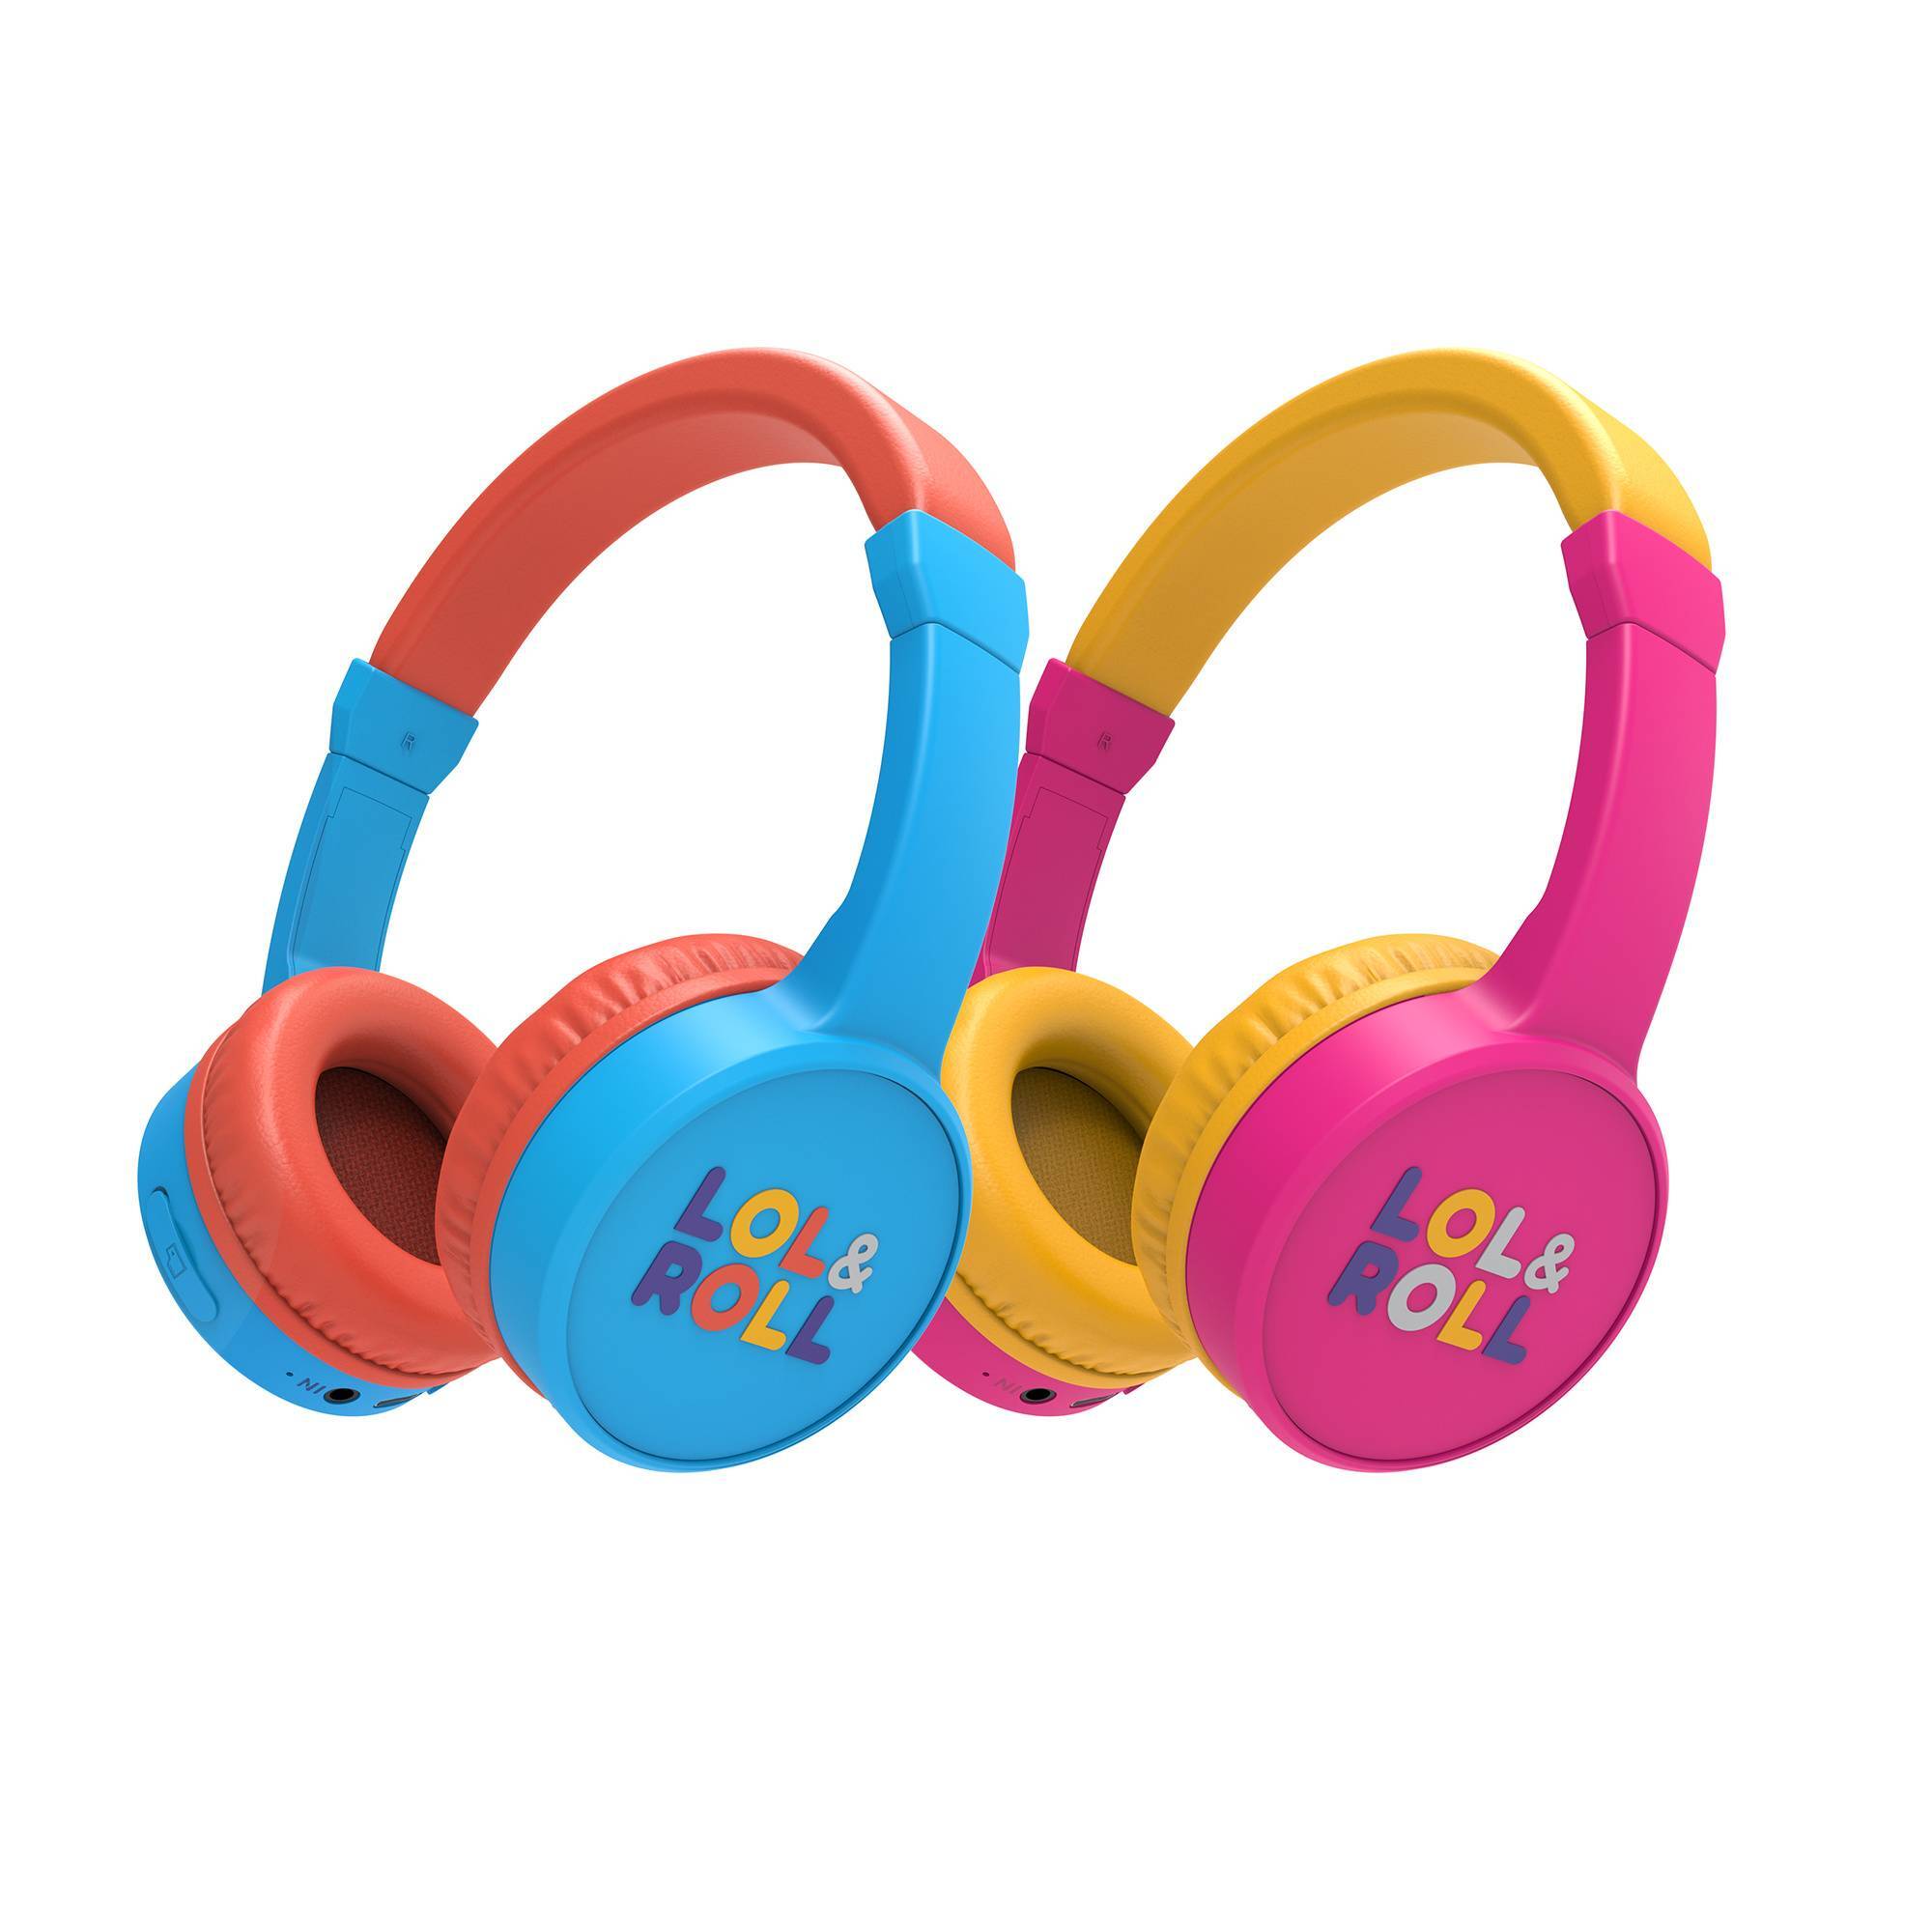 Lol&Roll Pop Kids Headphones Pink